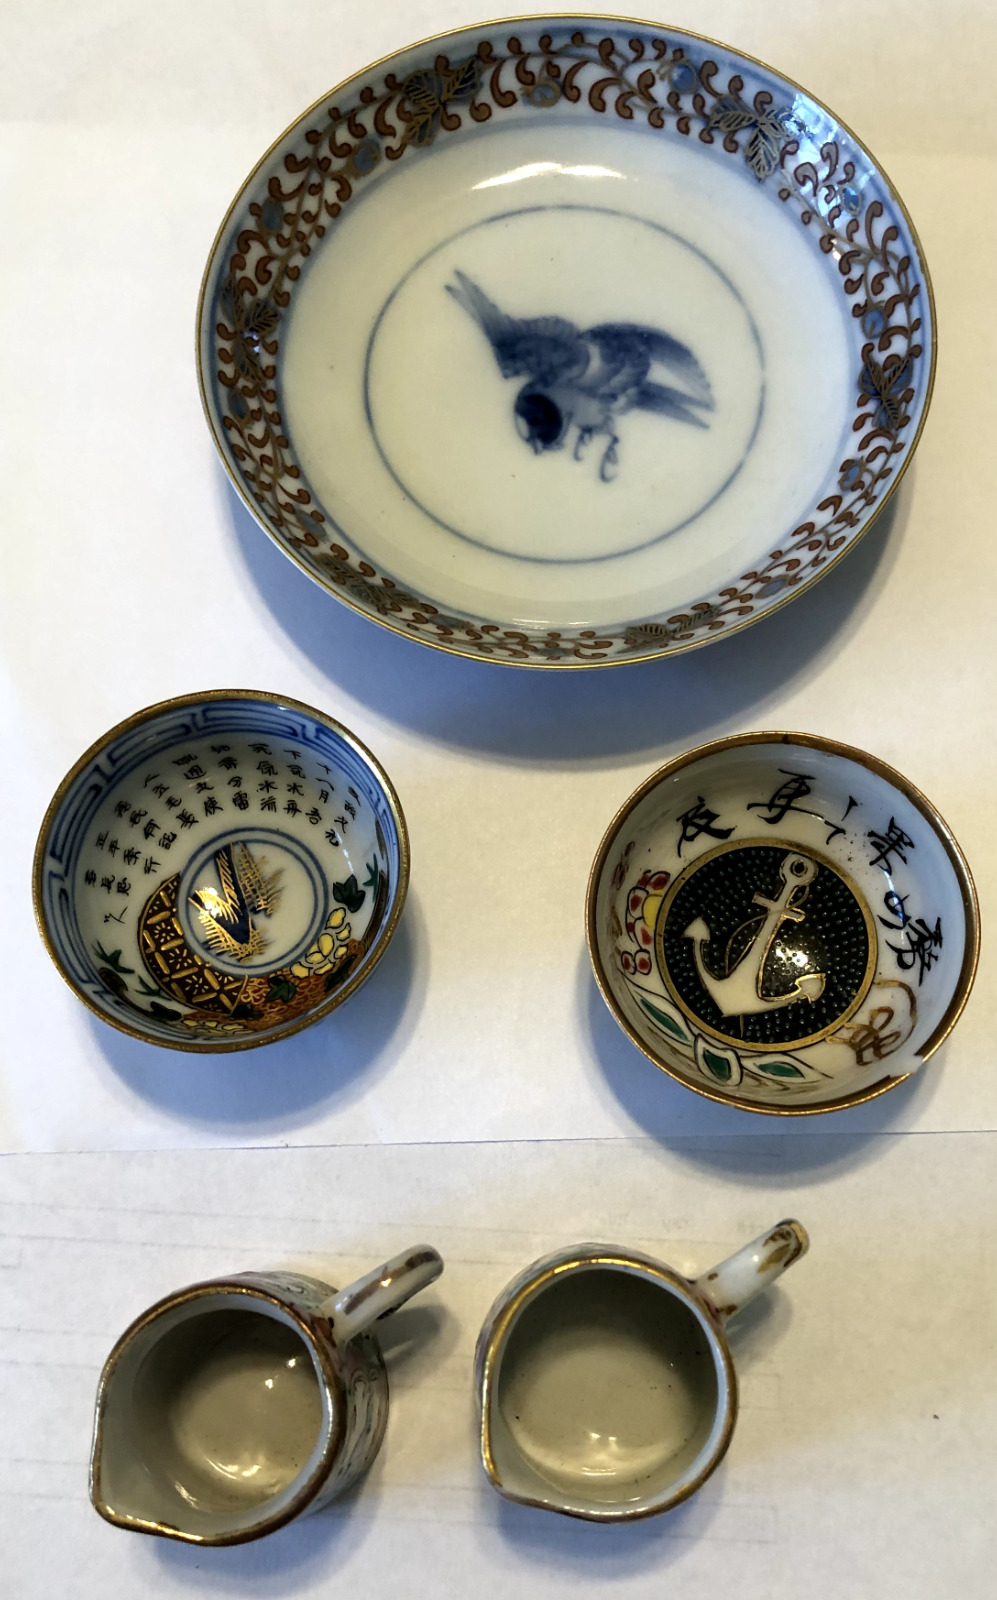 3 Metal Trinket Dish Bowl Plate and 2 Pottery tiny Pitchers China